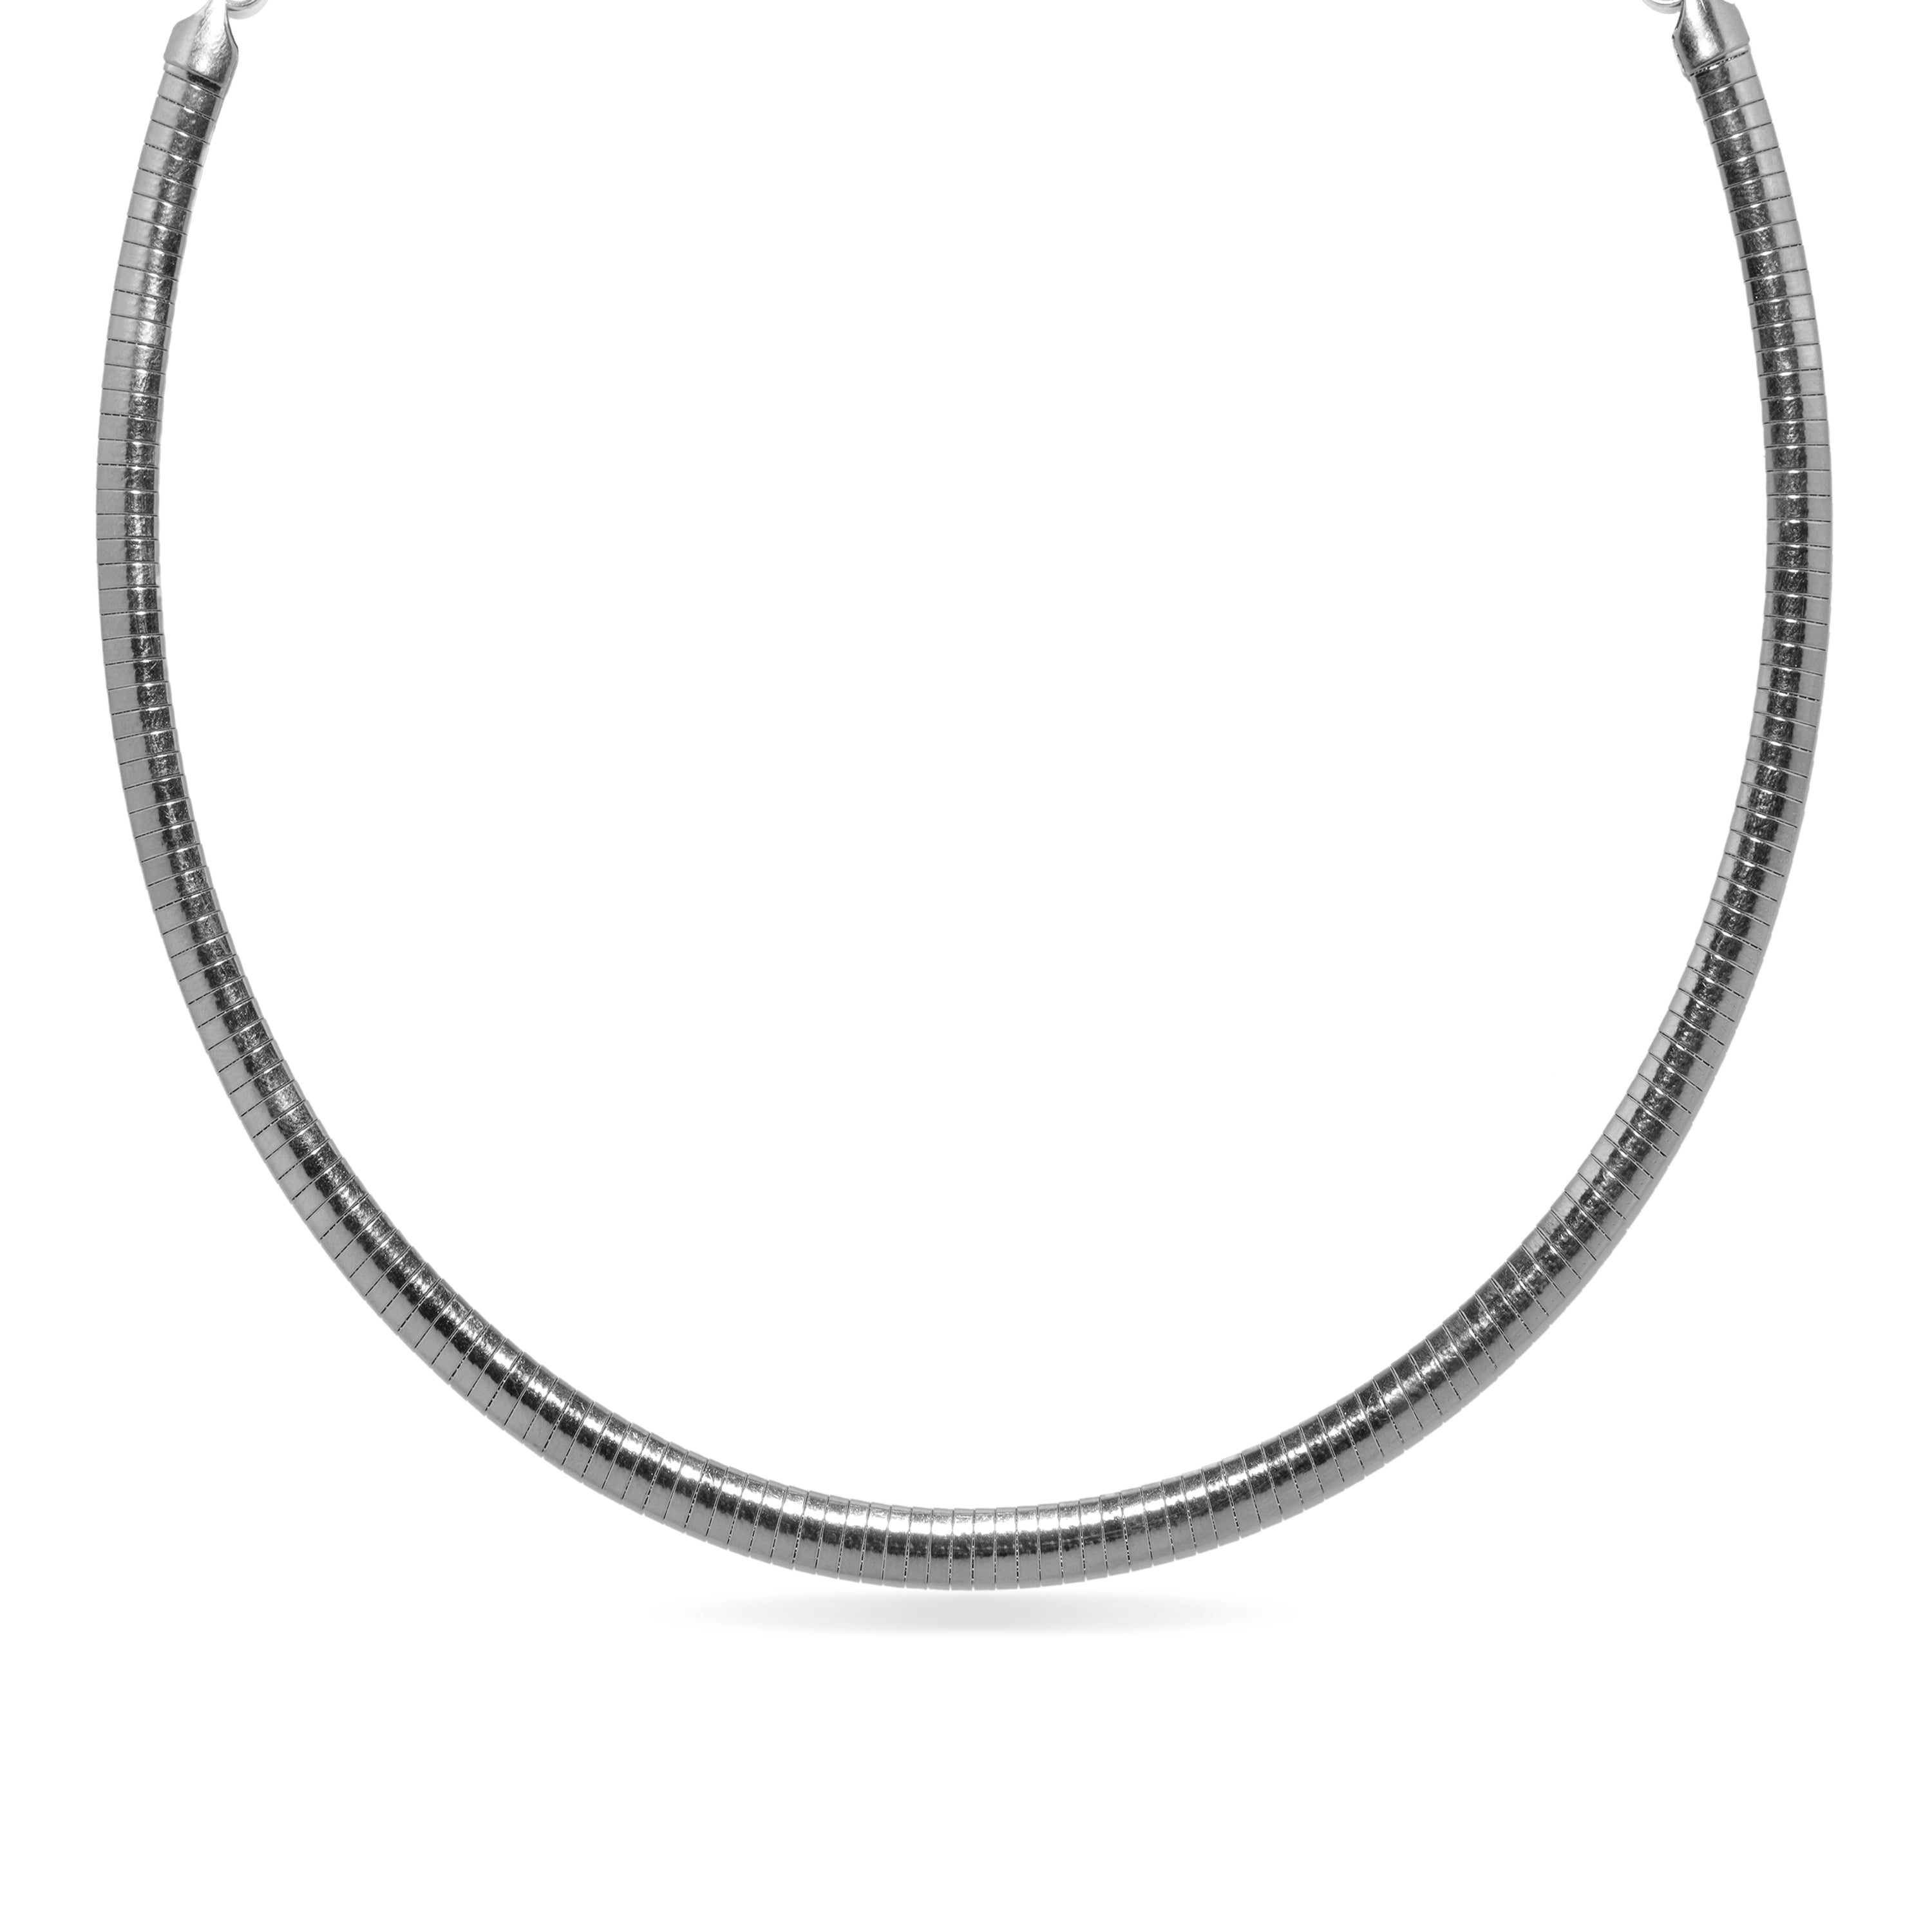 Vaszu necklace finished in silver